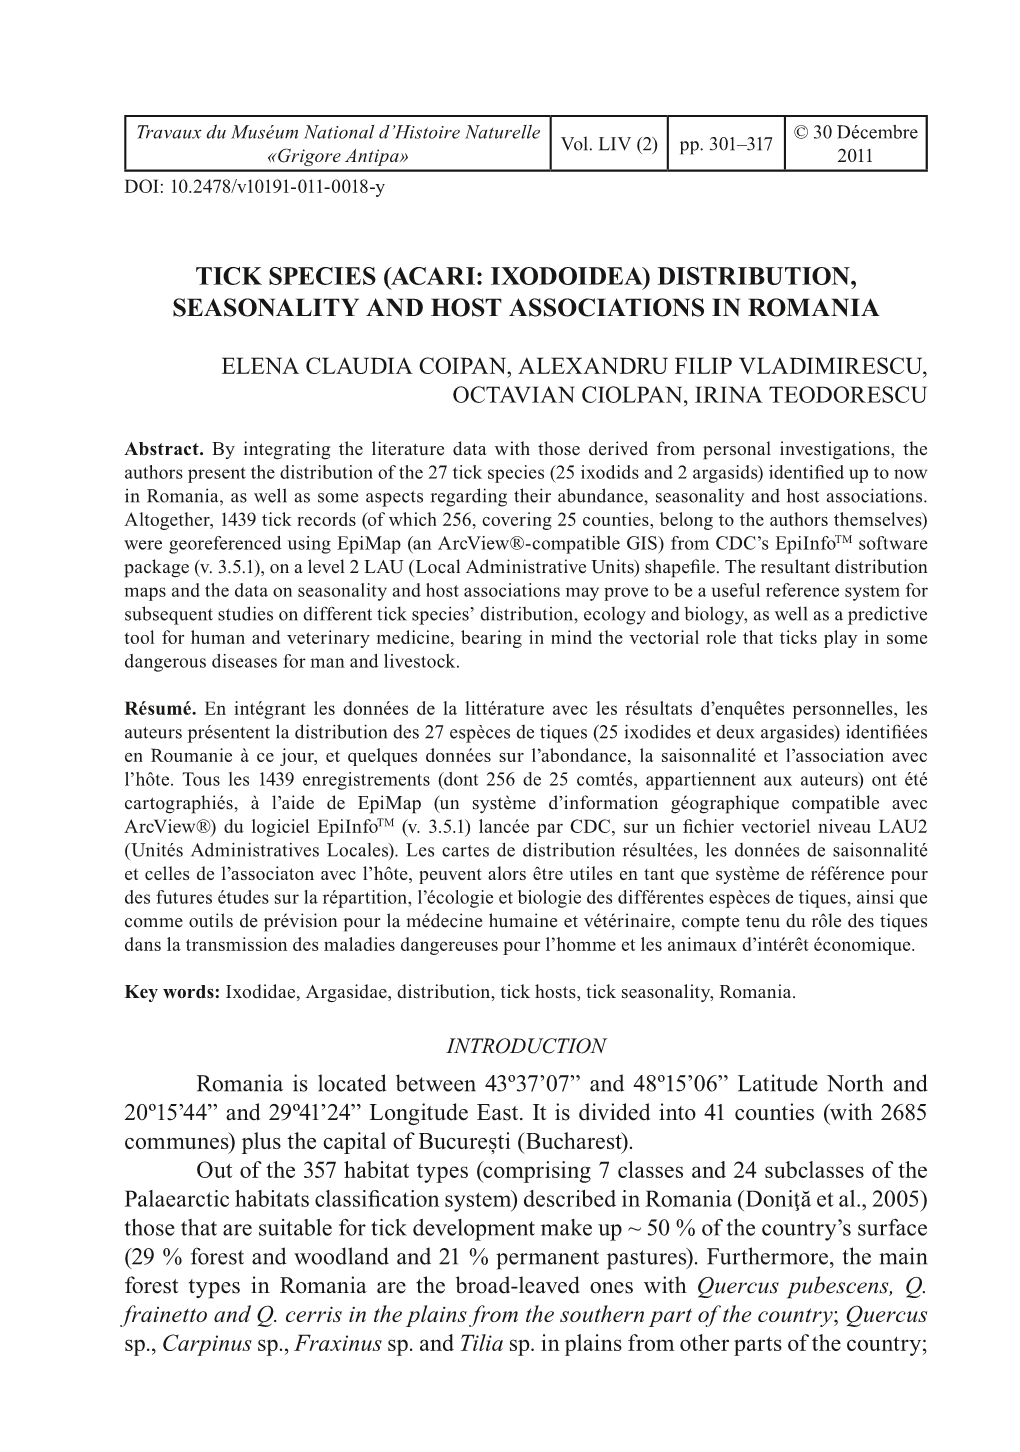 Tick Species (Acari: Ixodoidea) Distribution, Seasonality and Host Associations in Romania